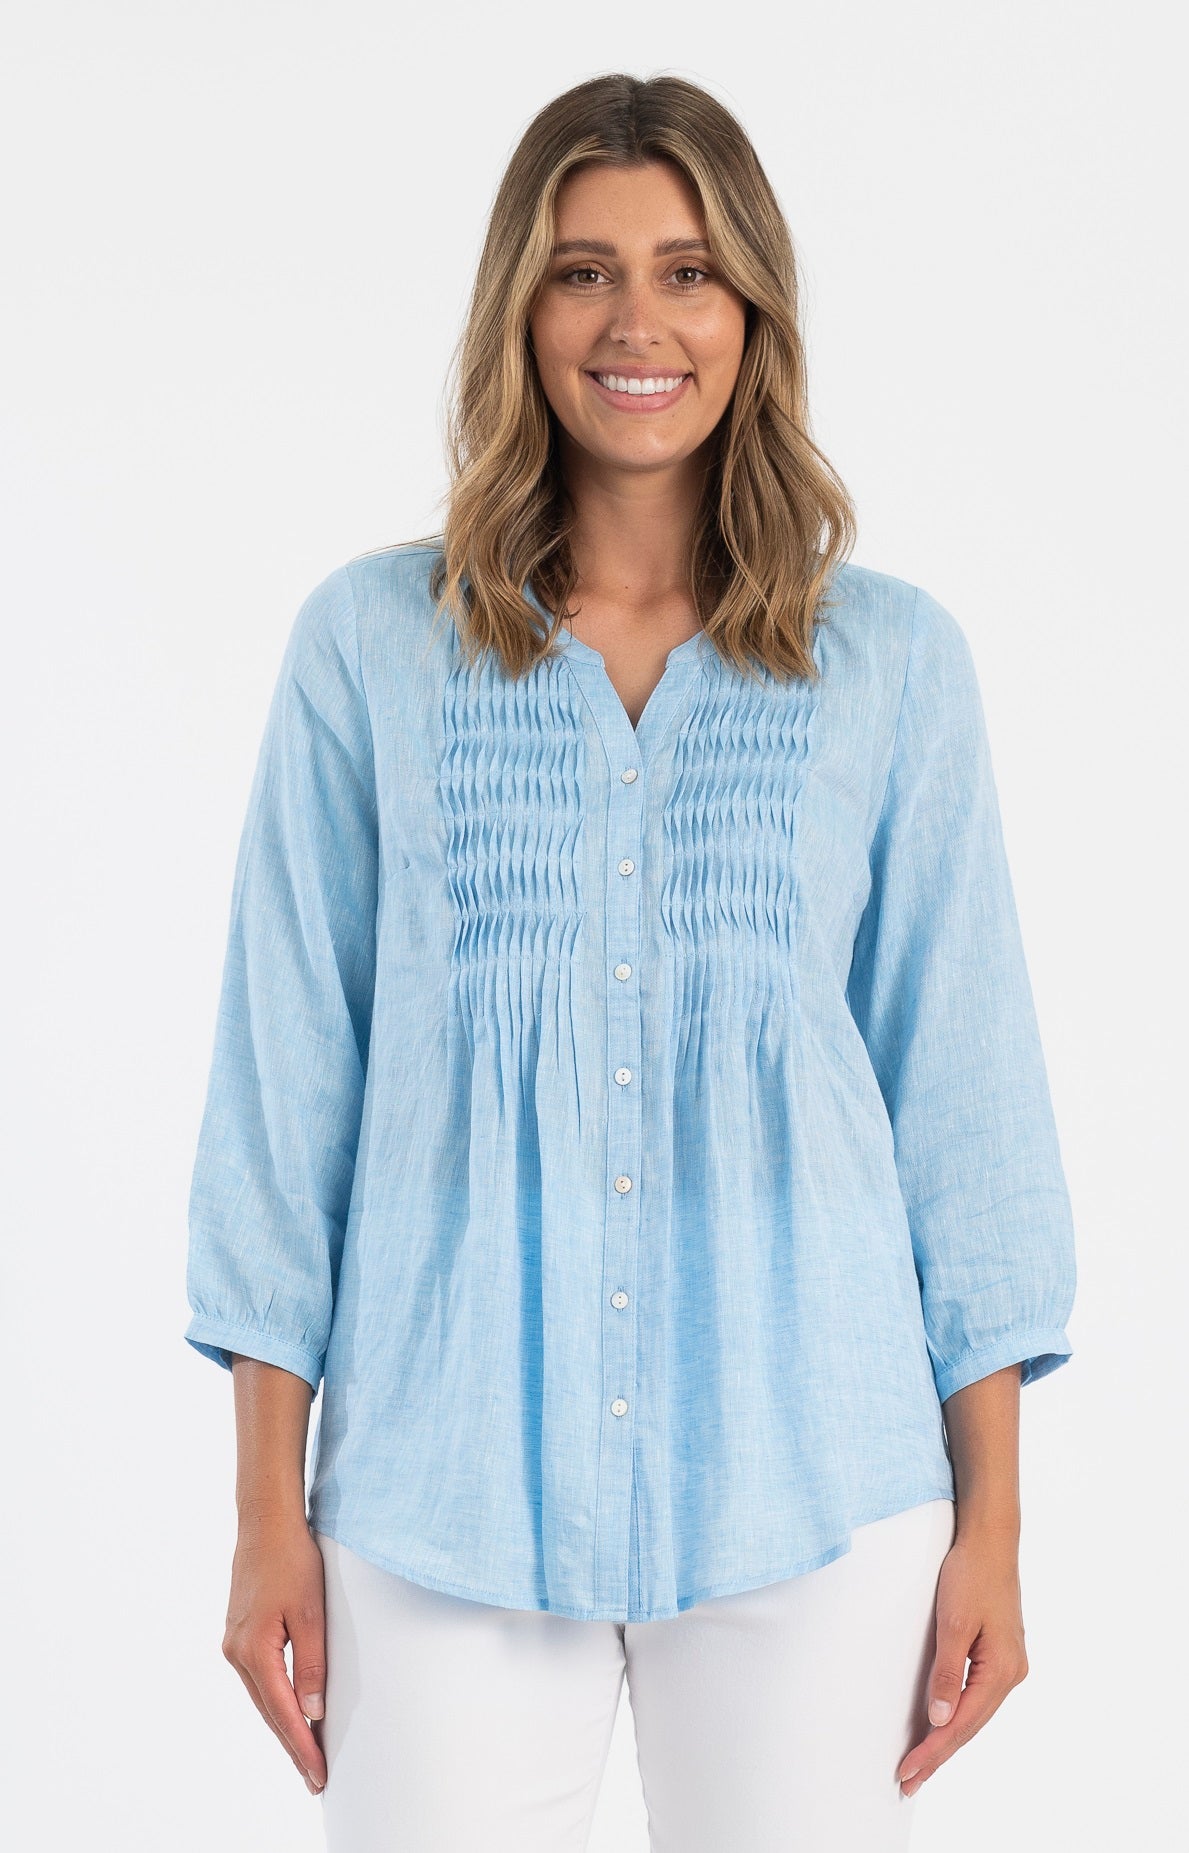 Maglia pintuck pleat linen shirt ON SALE NOW $99 - Lesleys of Gawler